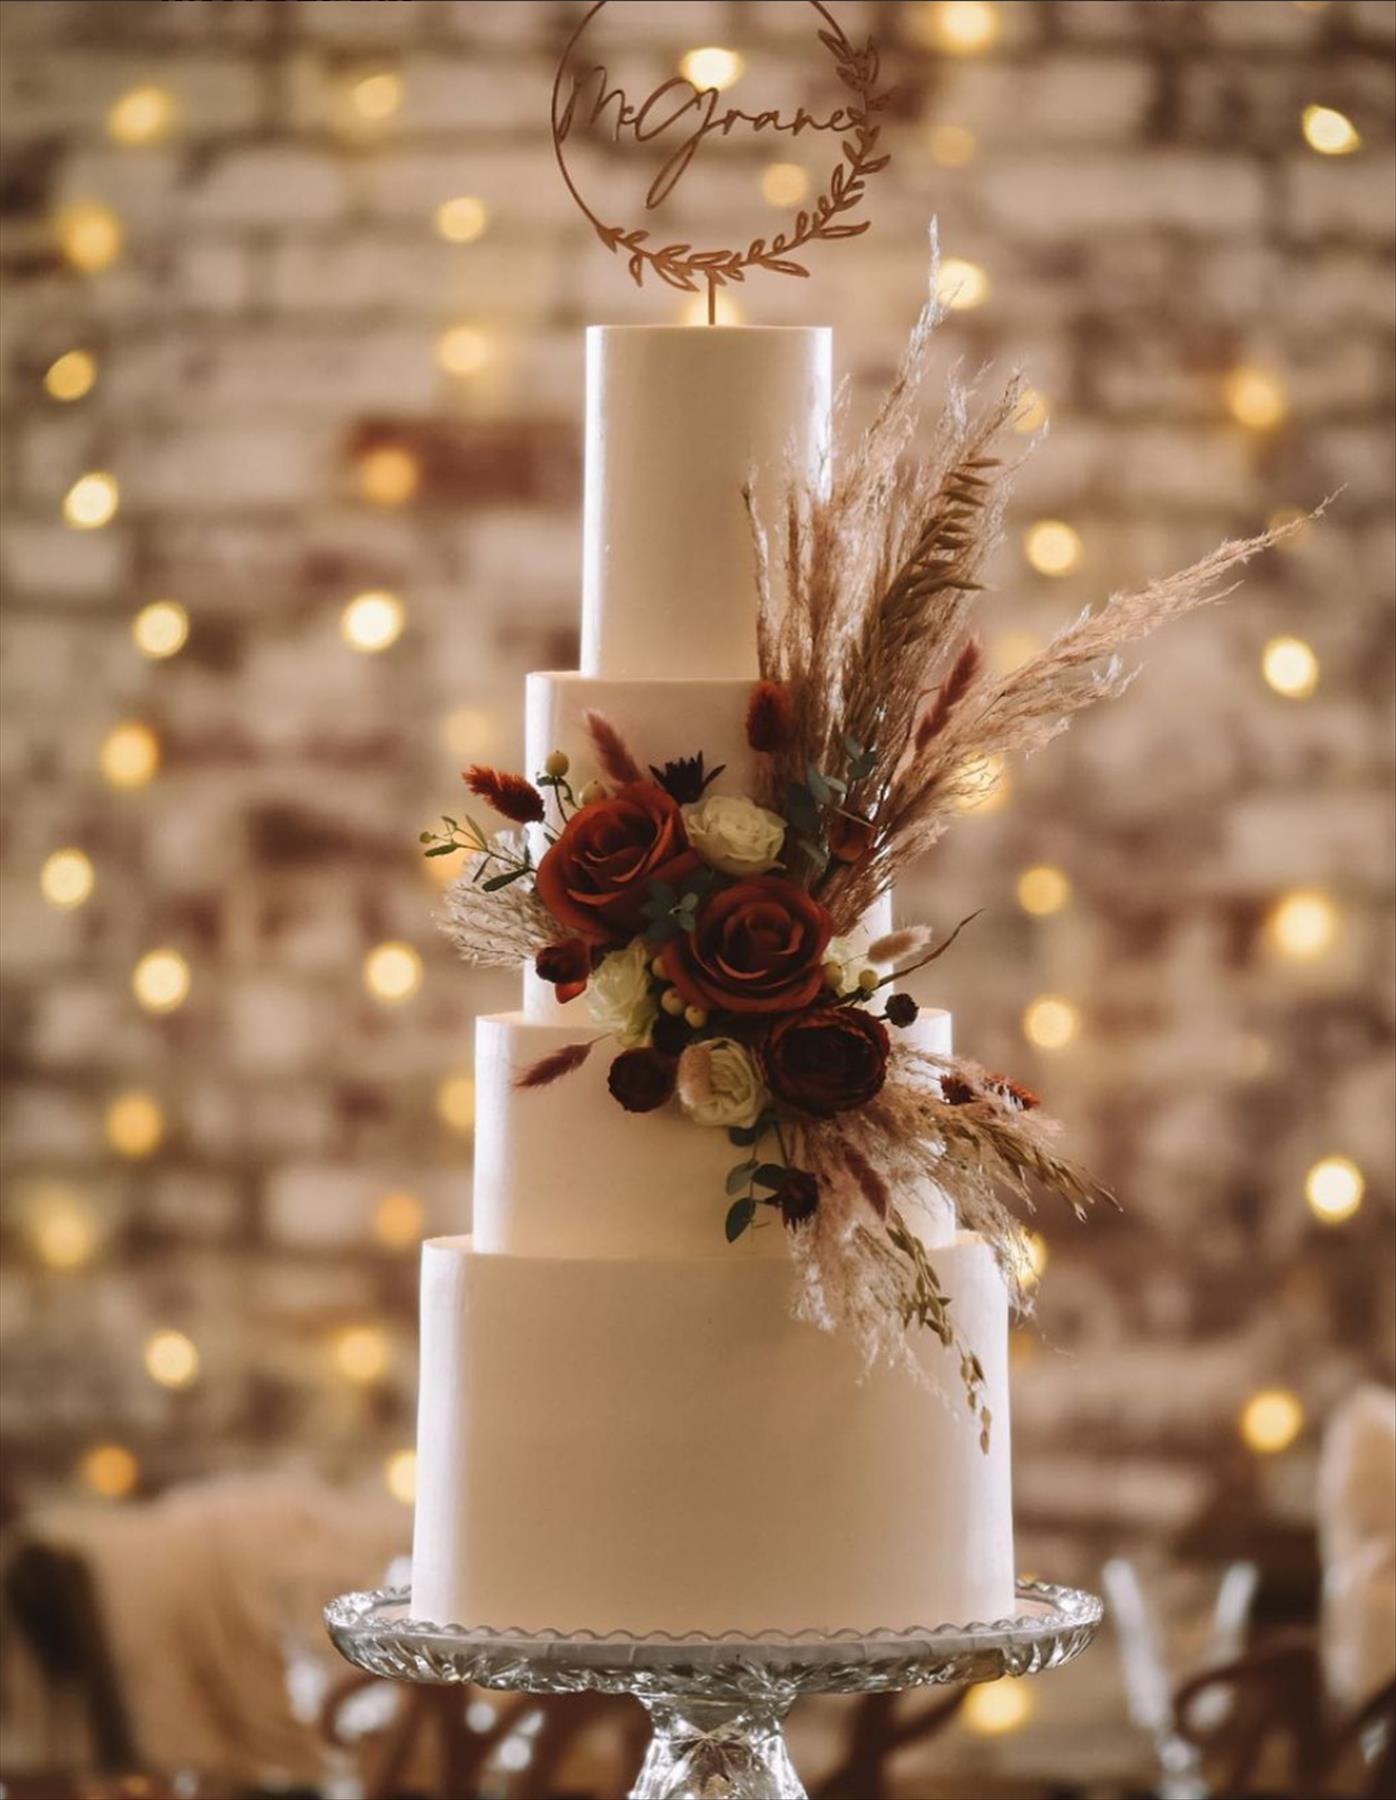 Romantic Christmas Wedding Cake Ideas for a Winter Wedding